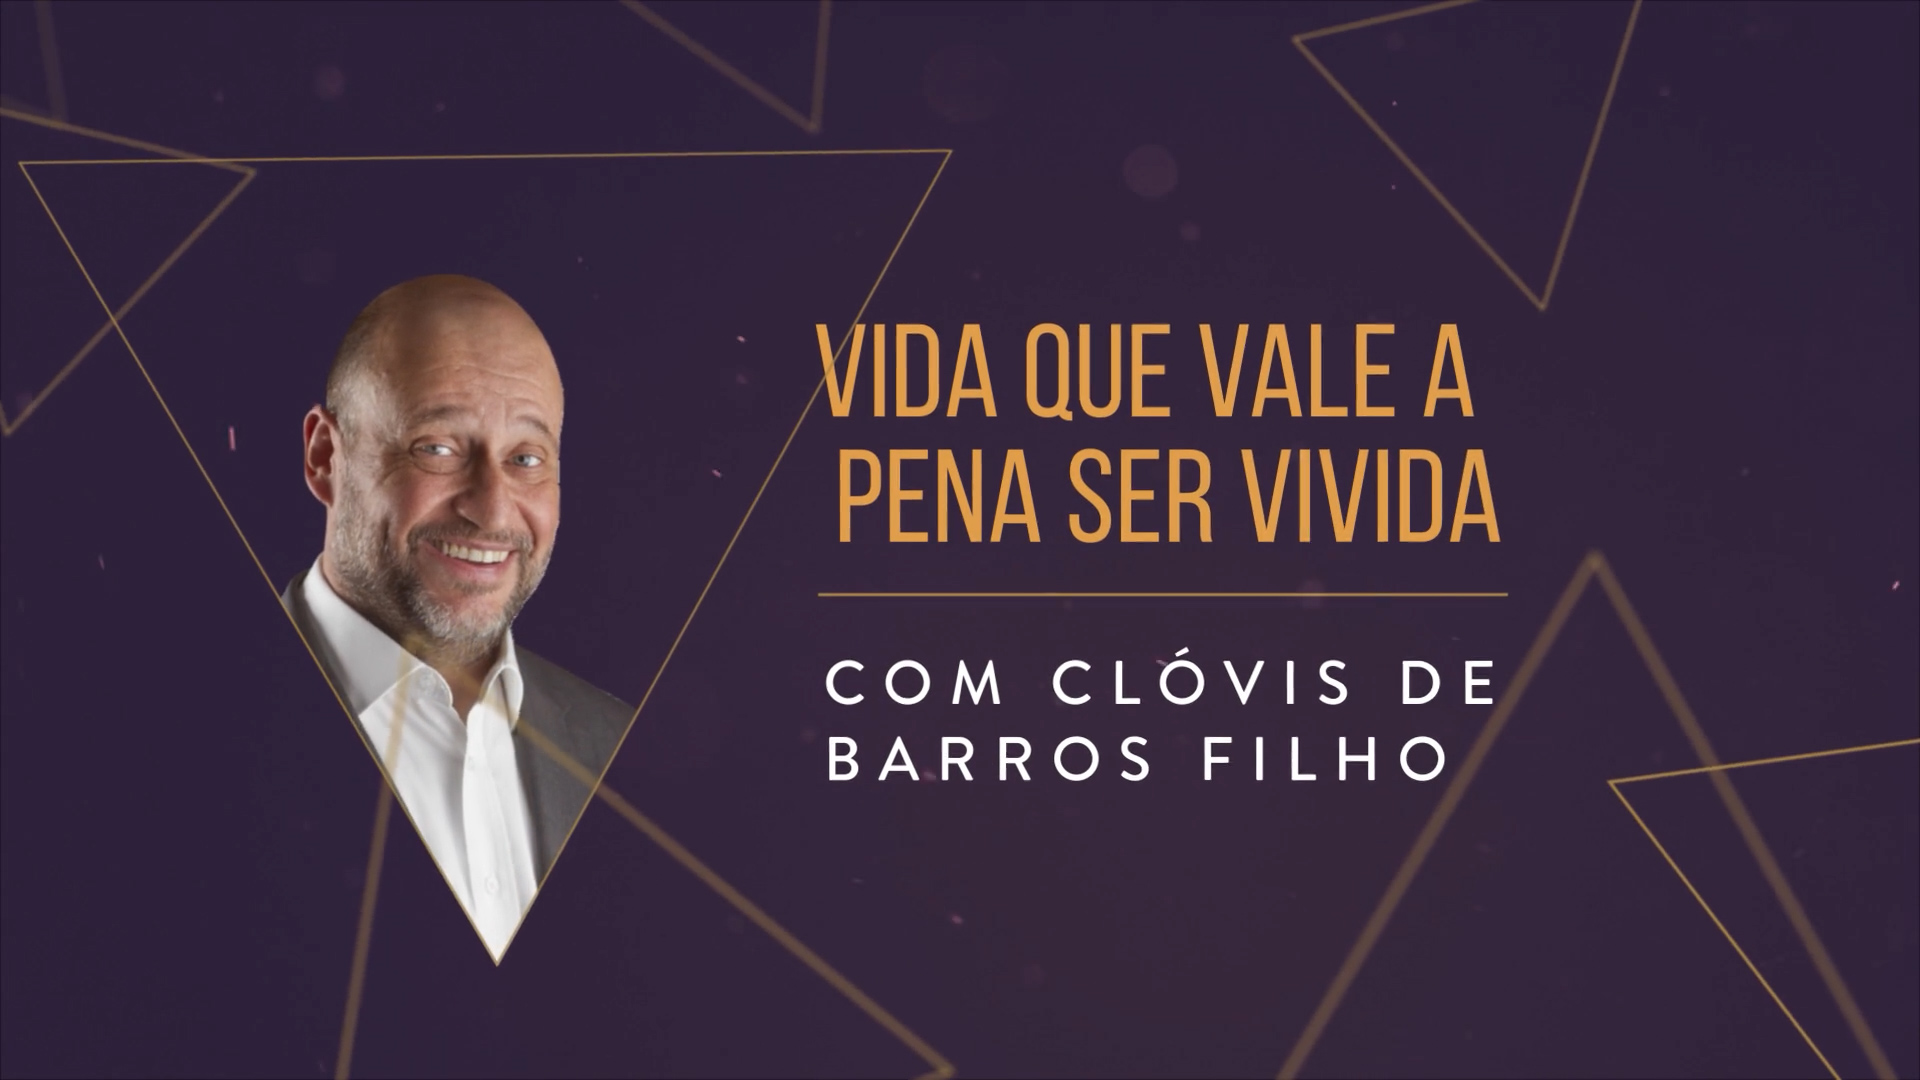 Lecture by Clóvis de Barros Filho